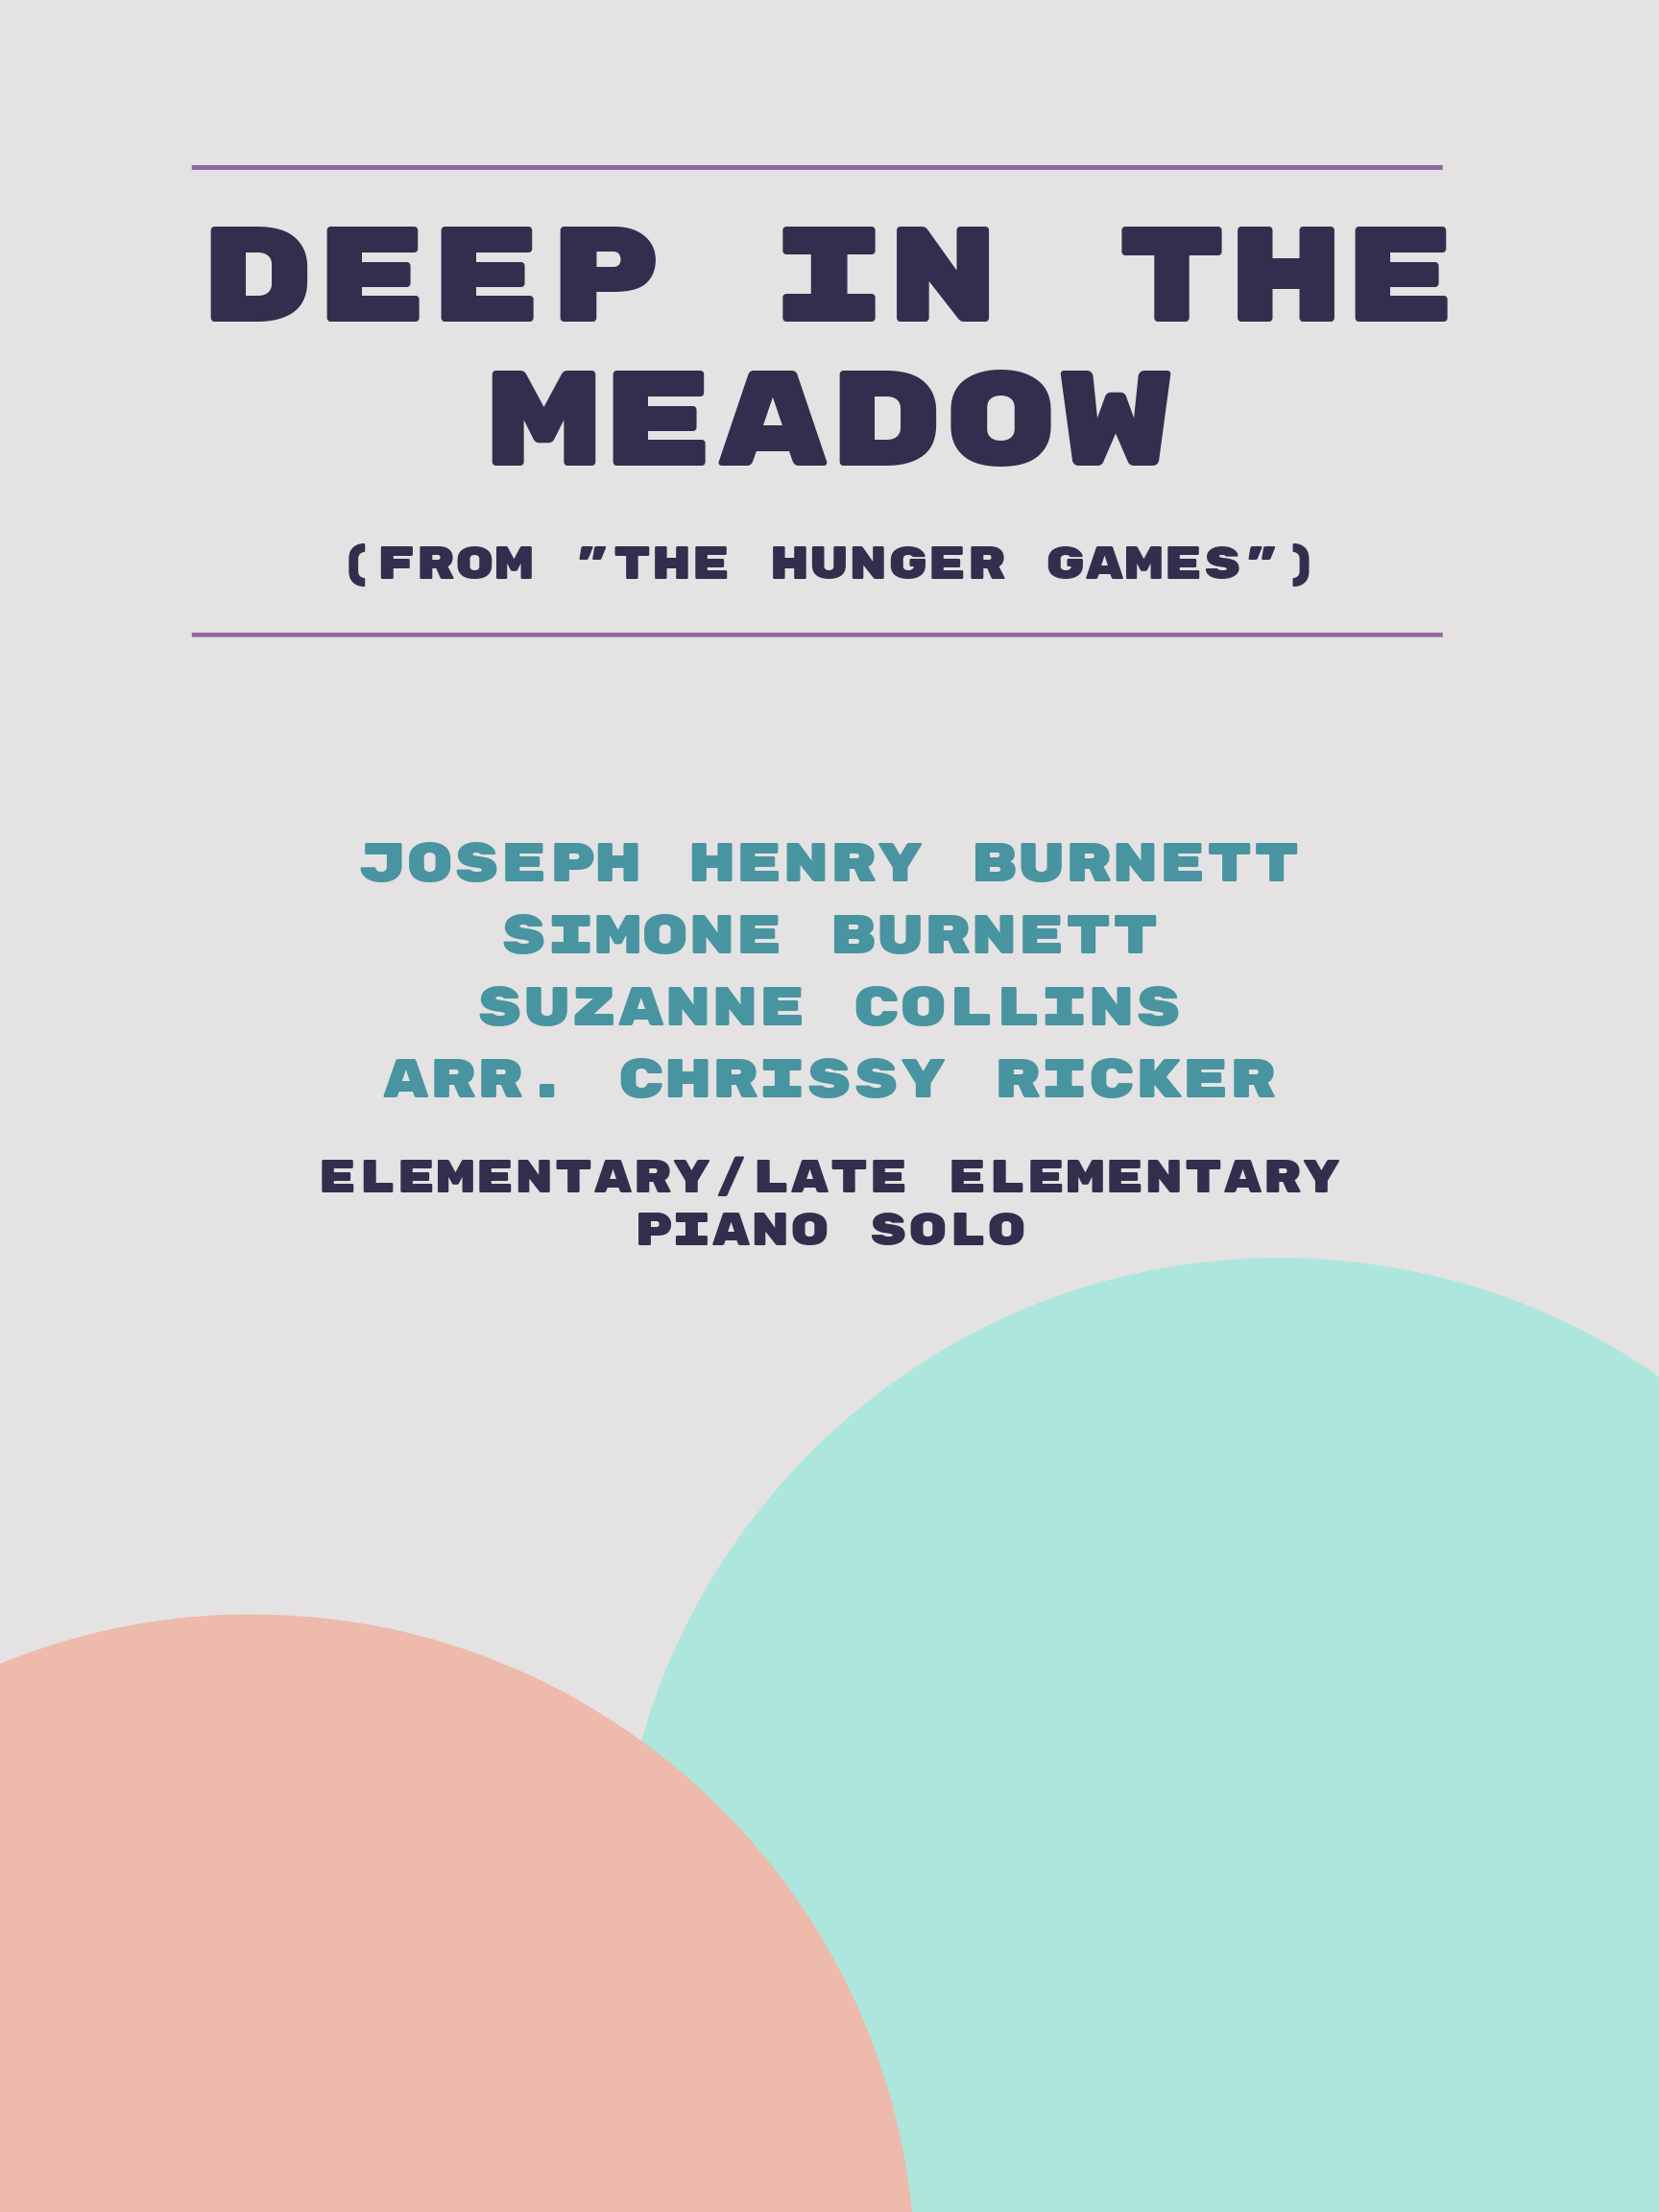 Deep in the Meadow by Joseph Henry Burnett, Simone Burnett, Suzanne Collins